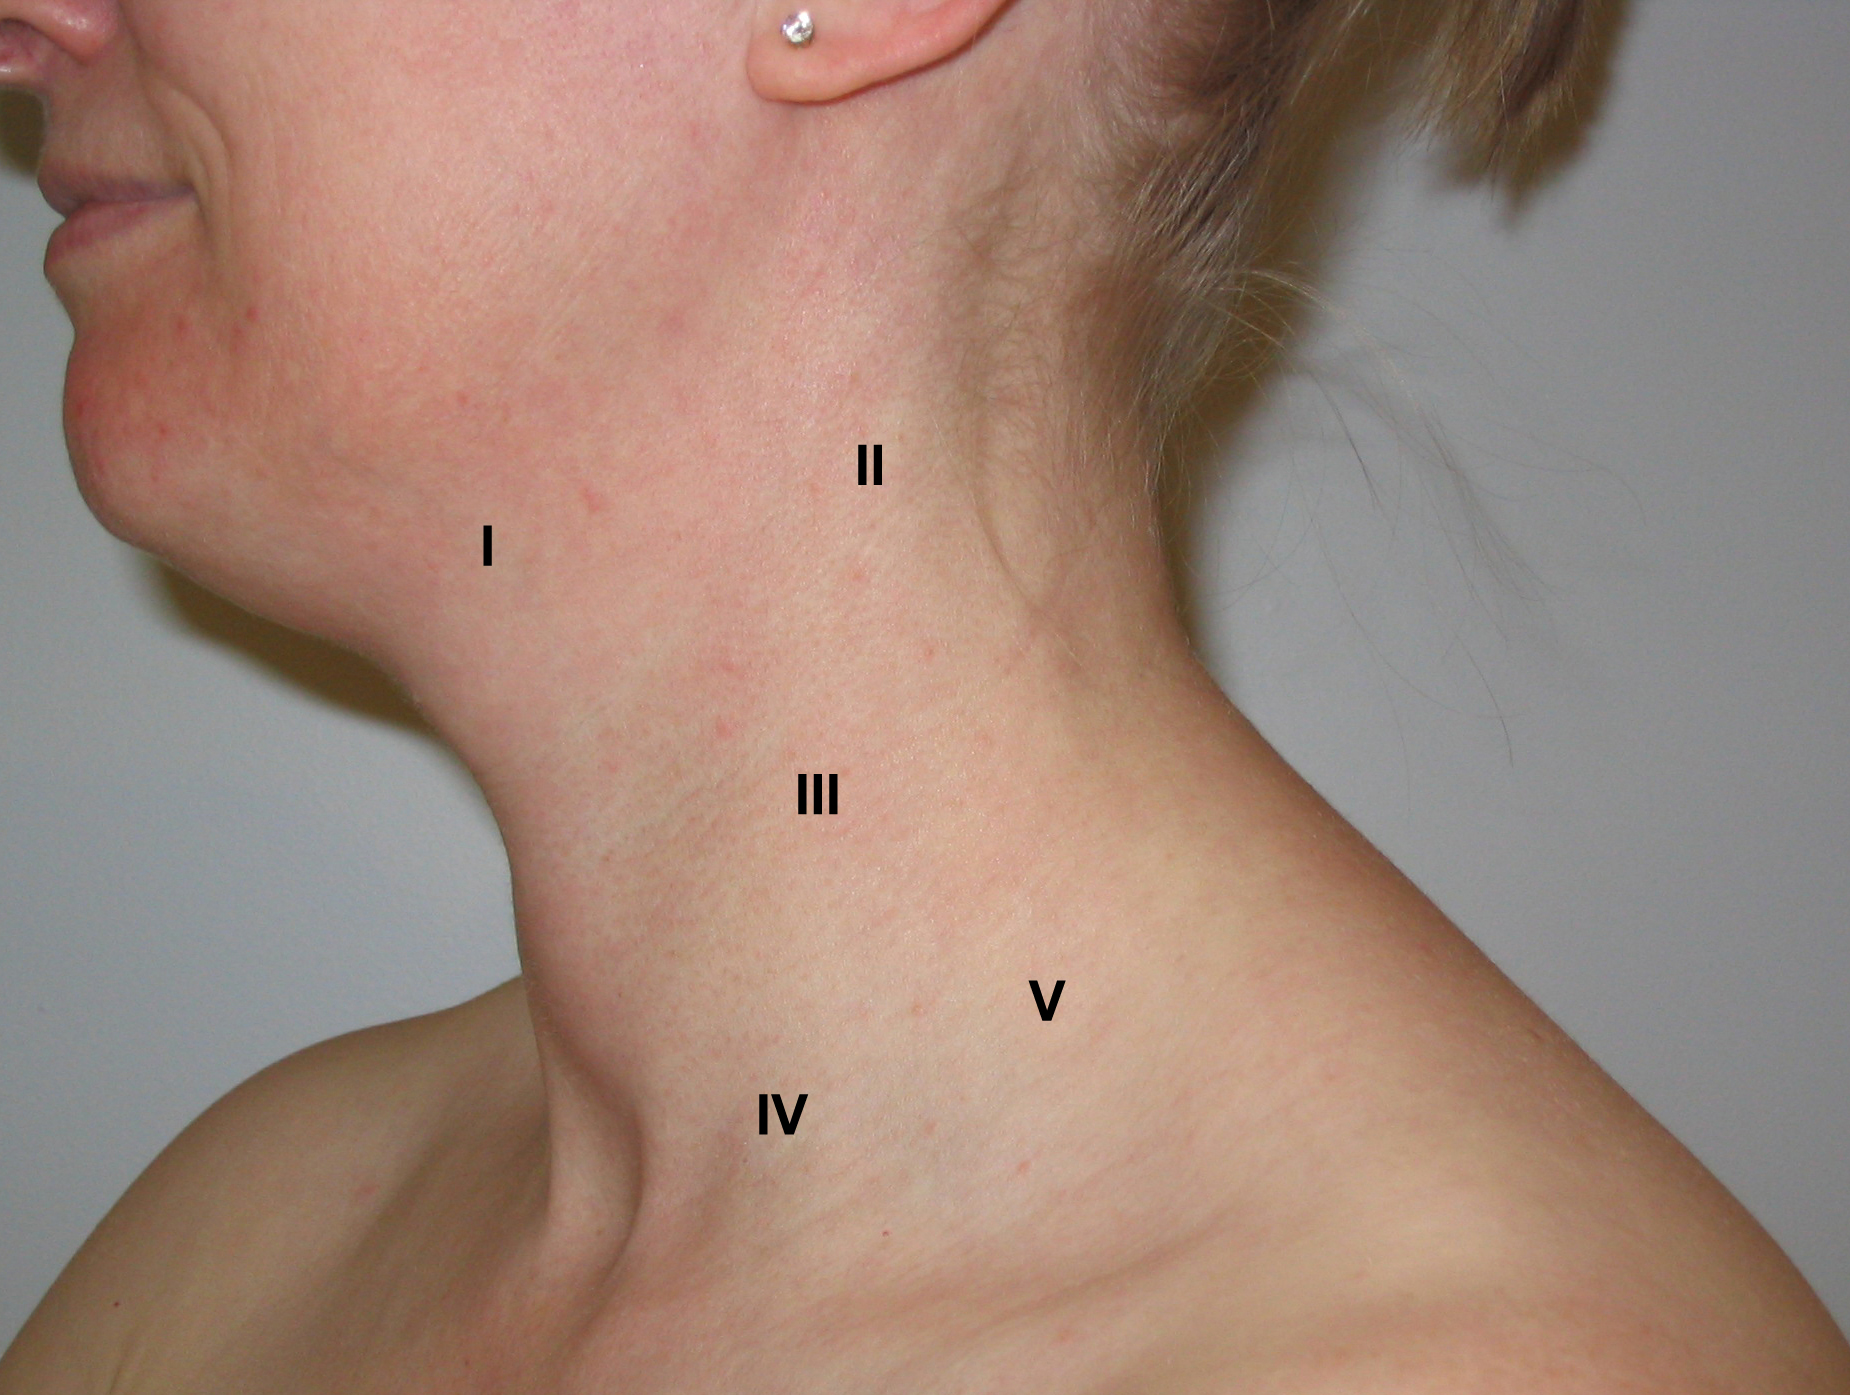 lymph nodes swollen on the back neck